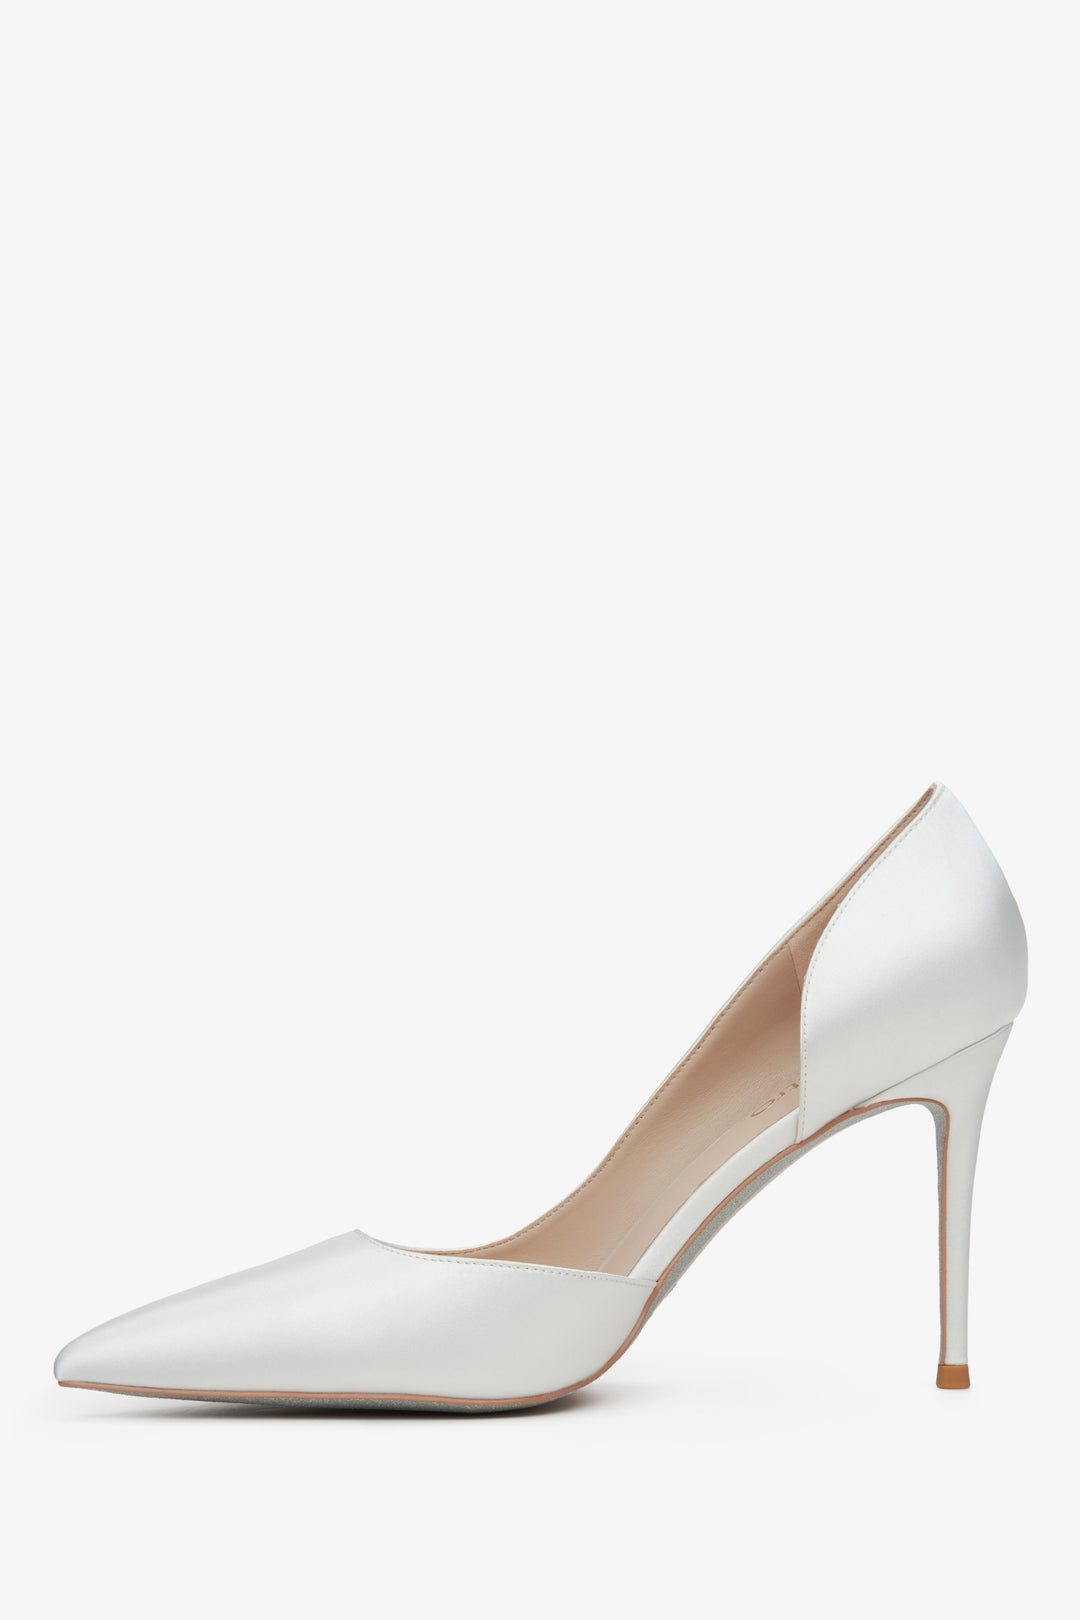 Women's milk-white Estro high heels with a satin finish - shoe profile.